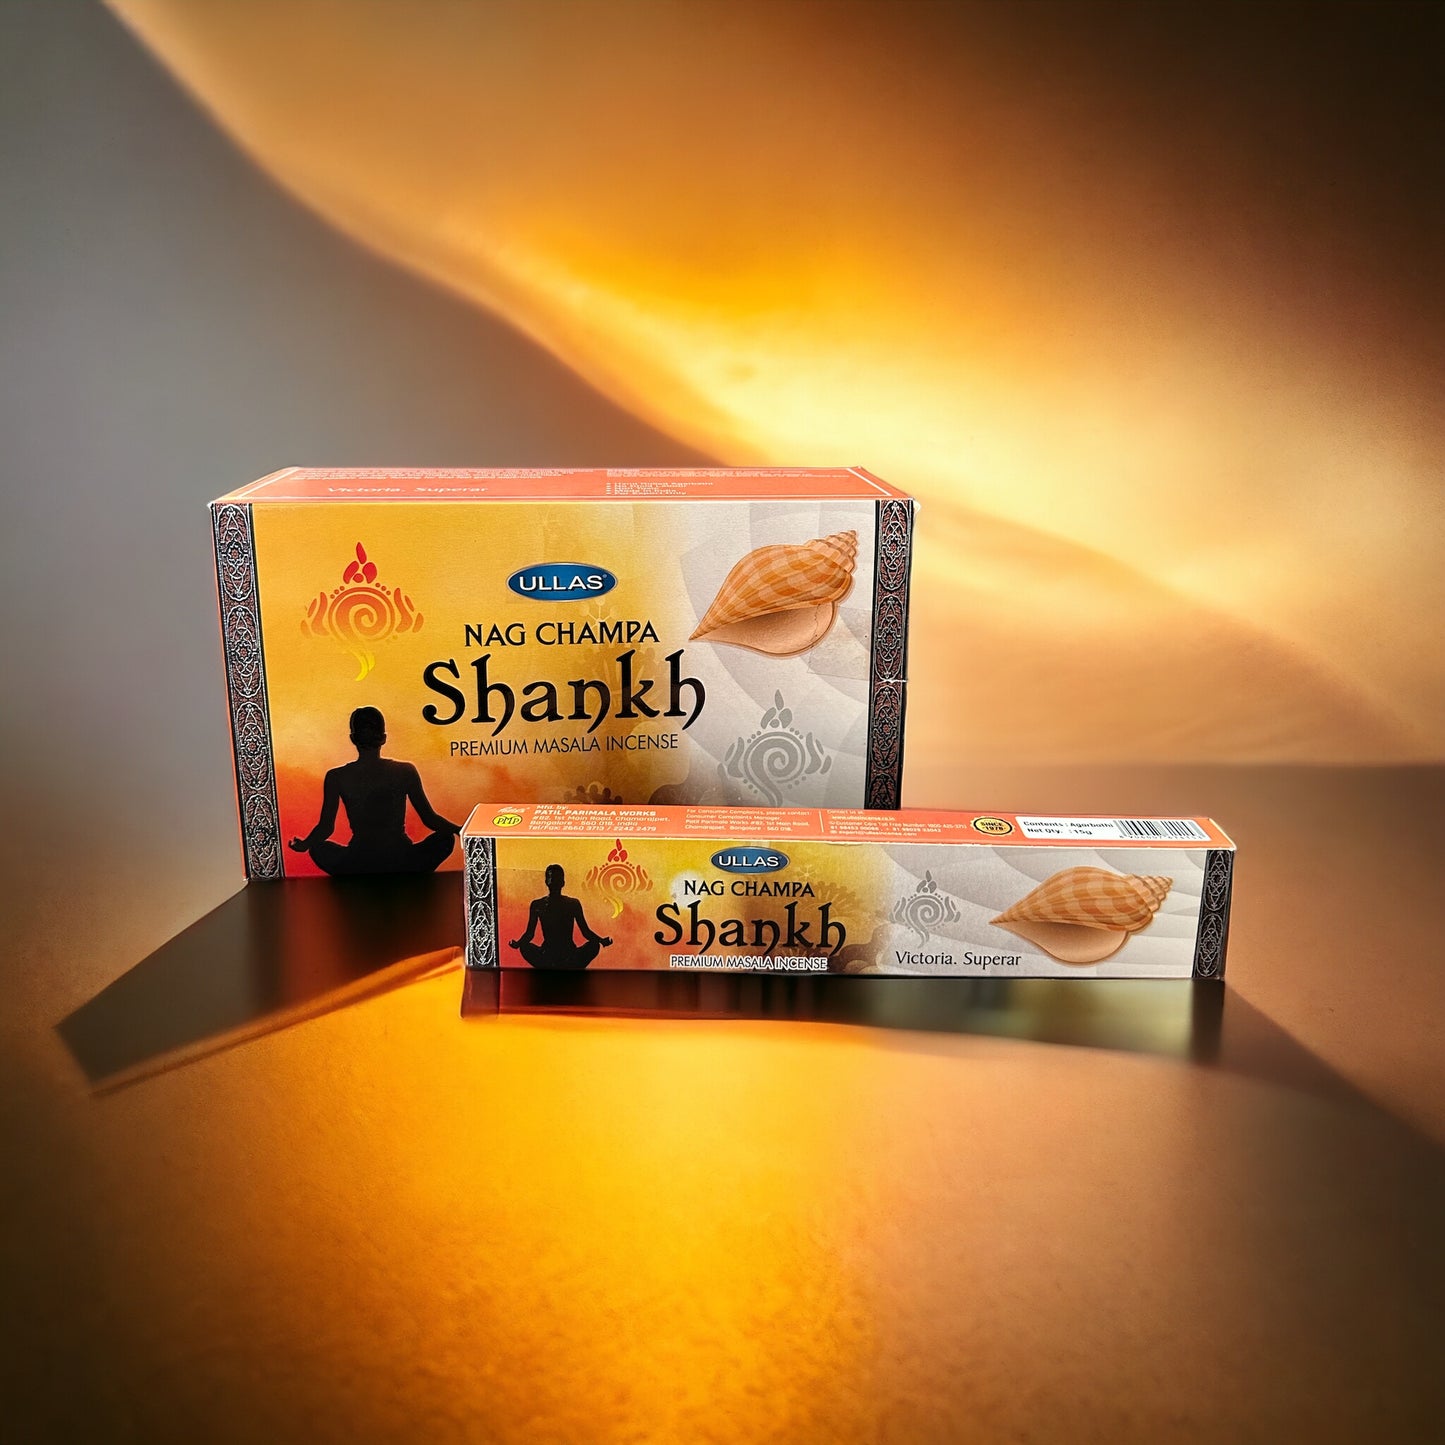 Nag Champa (Shankh) premium masala incense